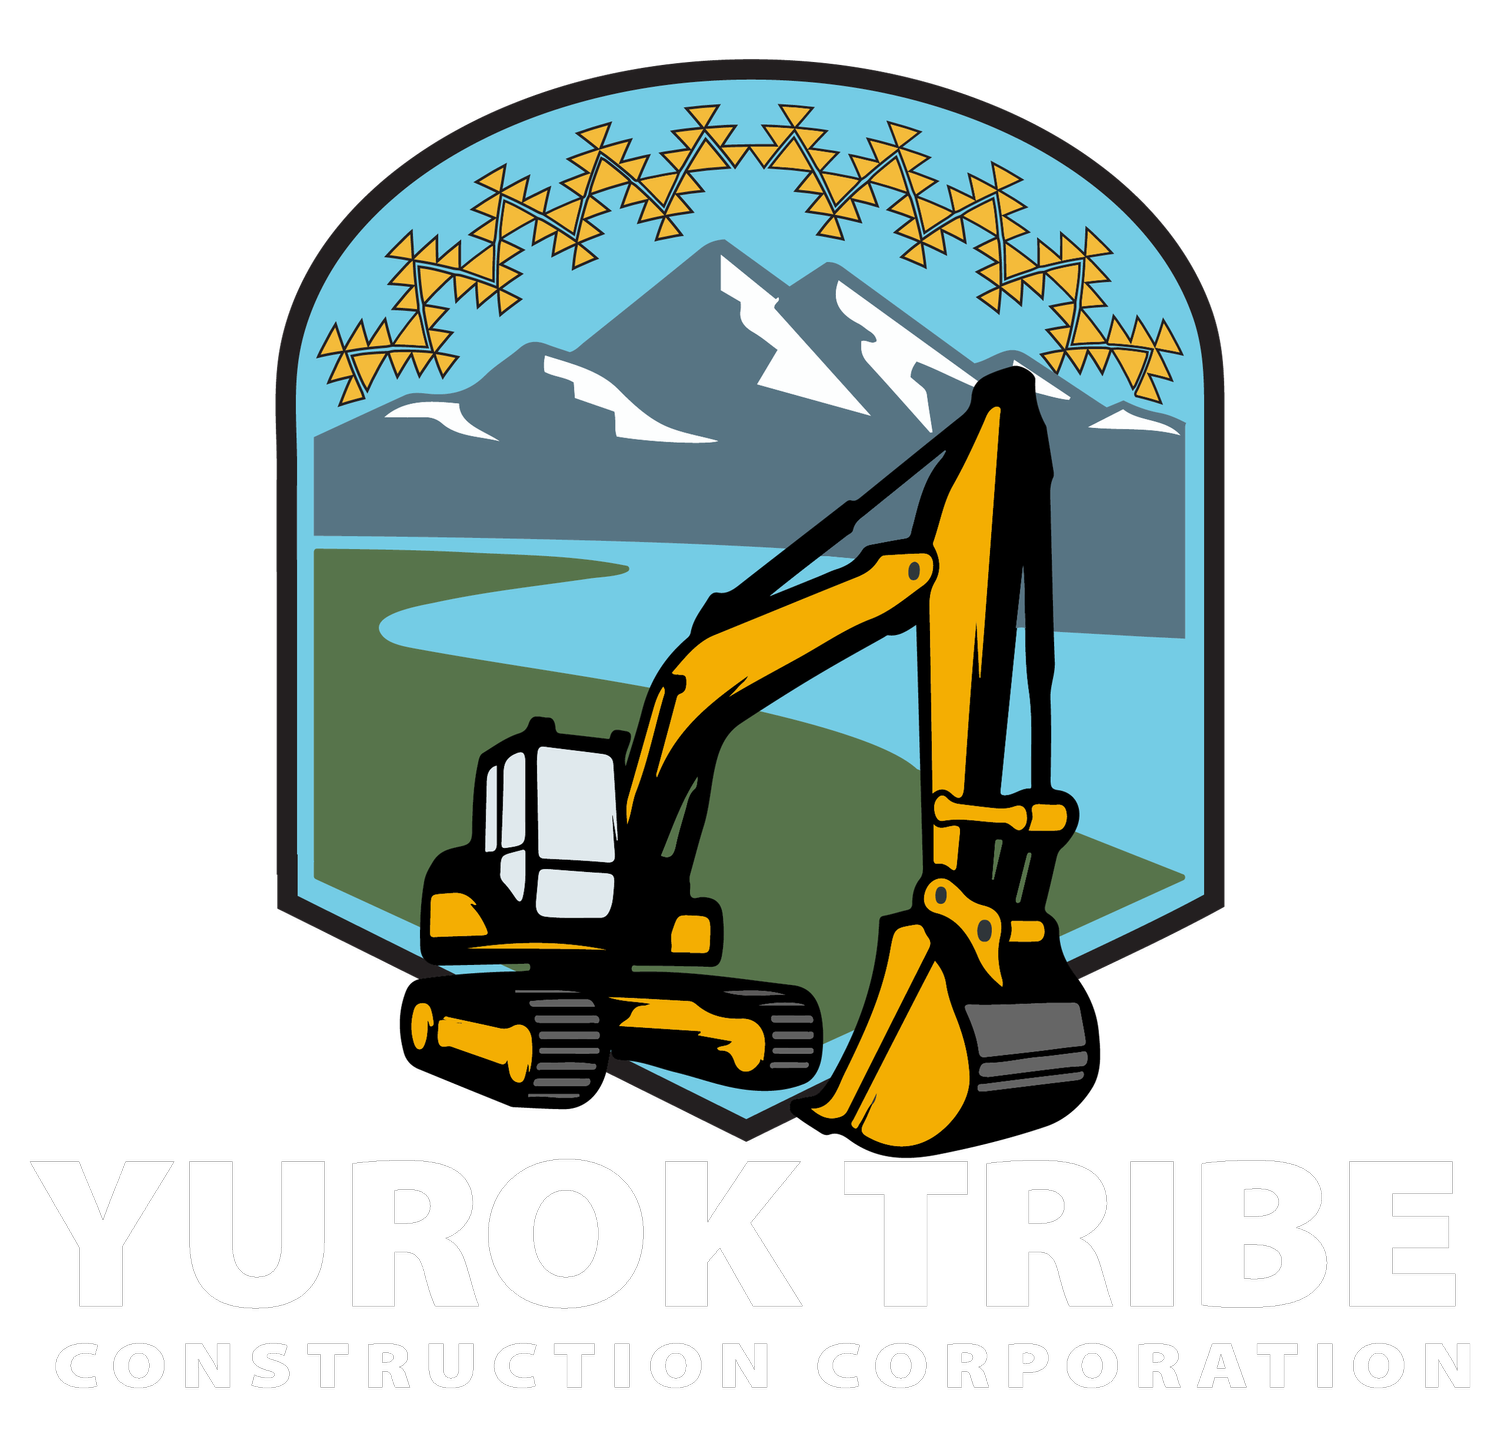 YUROK TRIBE CONSTRUCTION CORPORATION